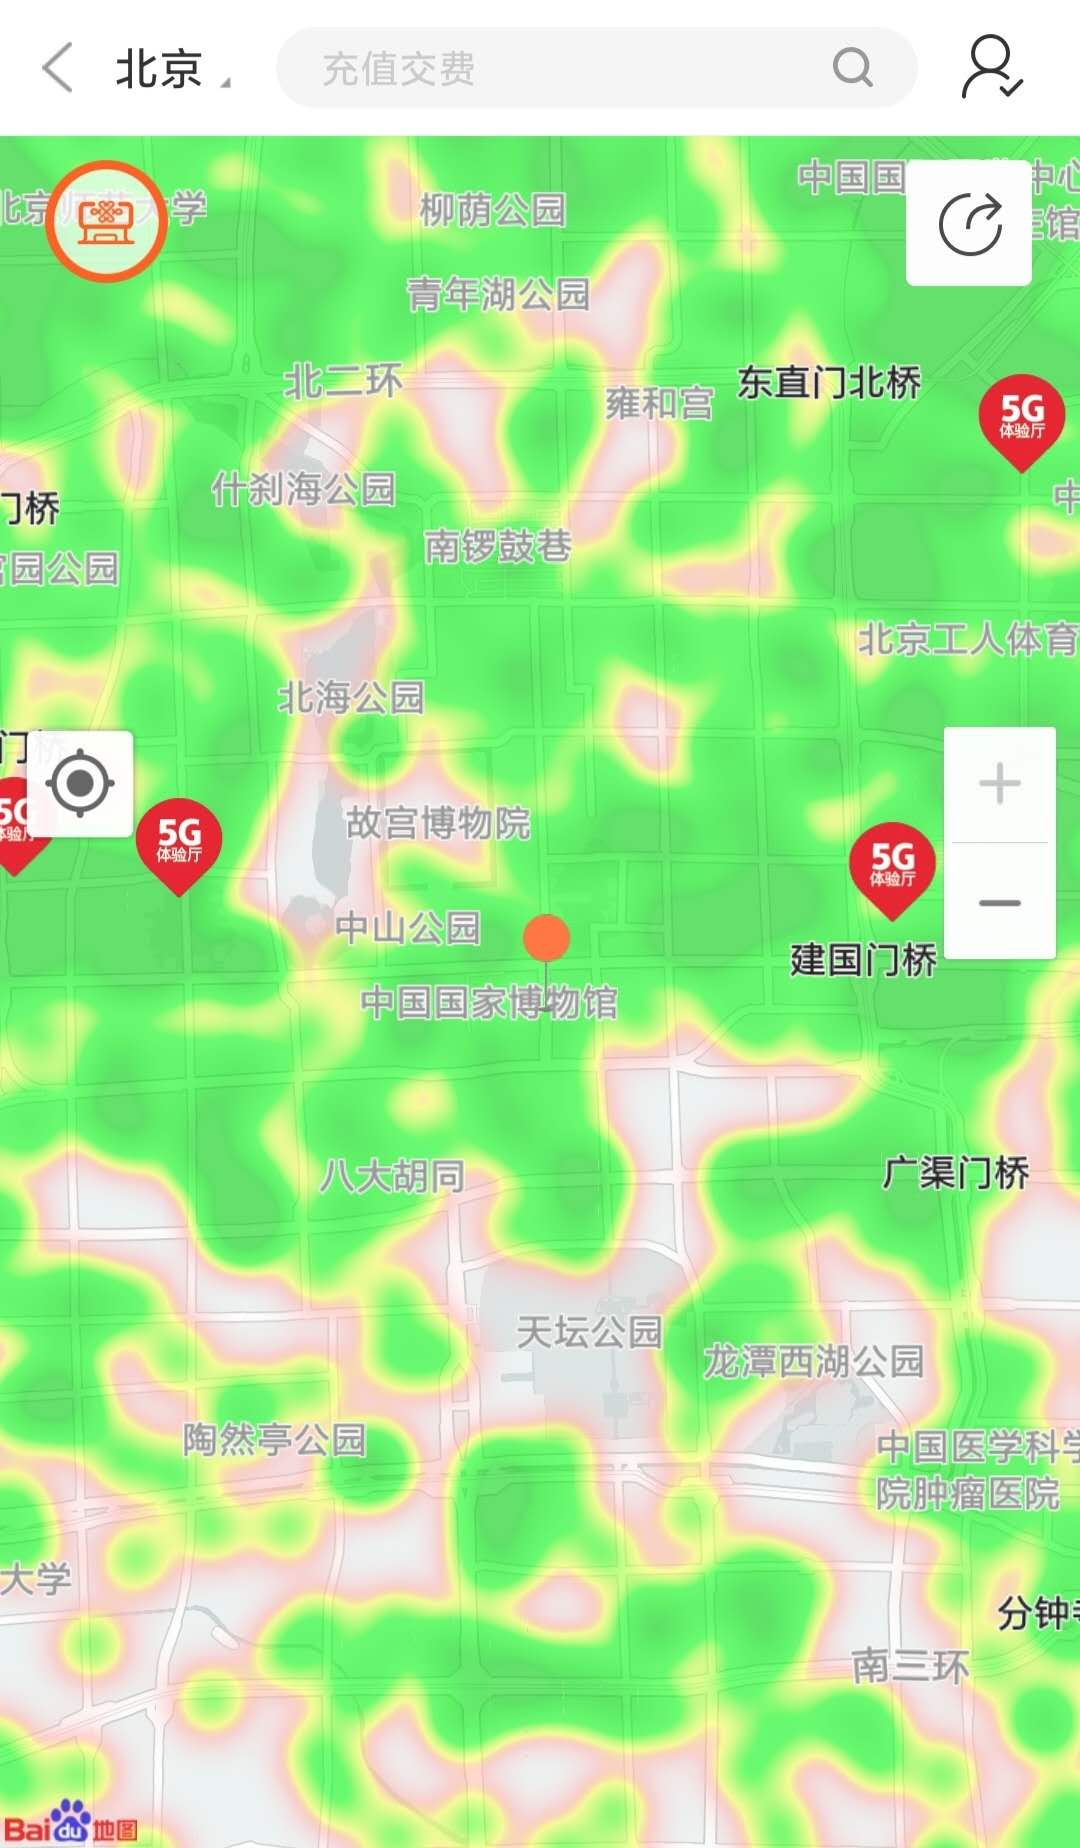 5G手机信号北京覆盖范围